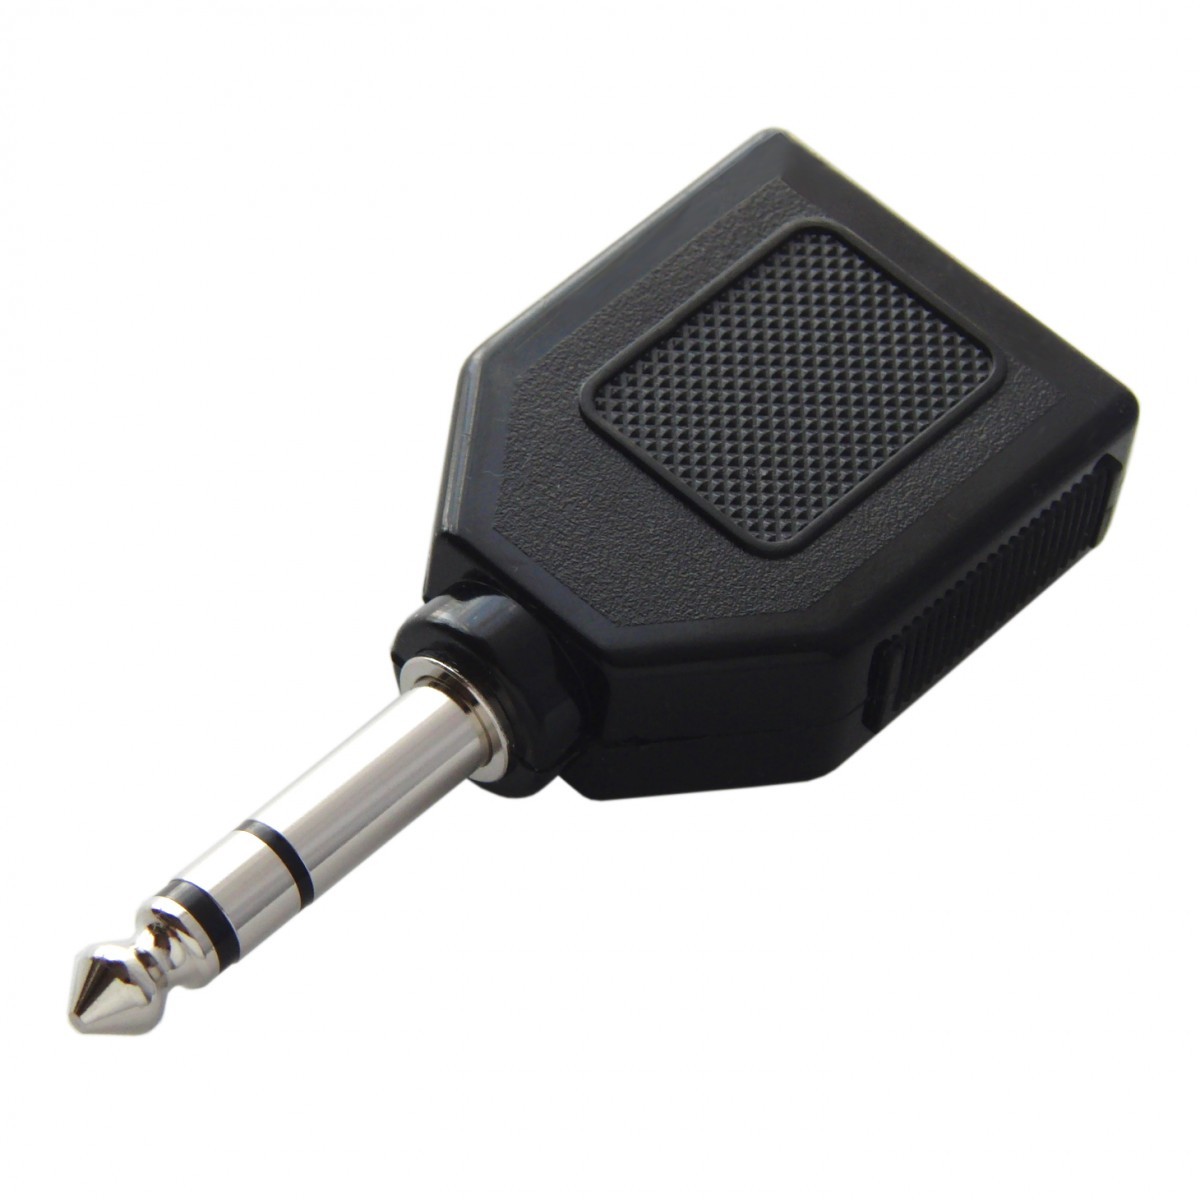  stereo standard plug 6.3mm ( male ) - stereo standard Jack 6.3mm ( female ) ×2 sharing plug PLG-B02